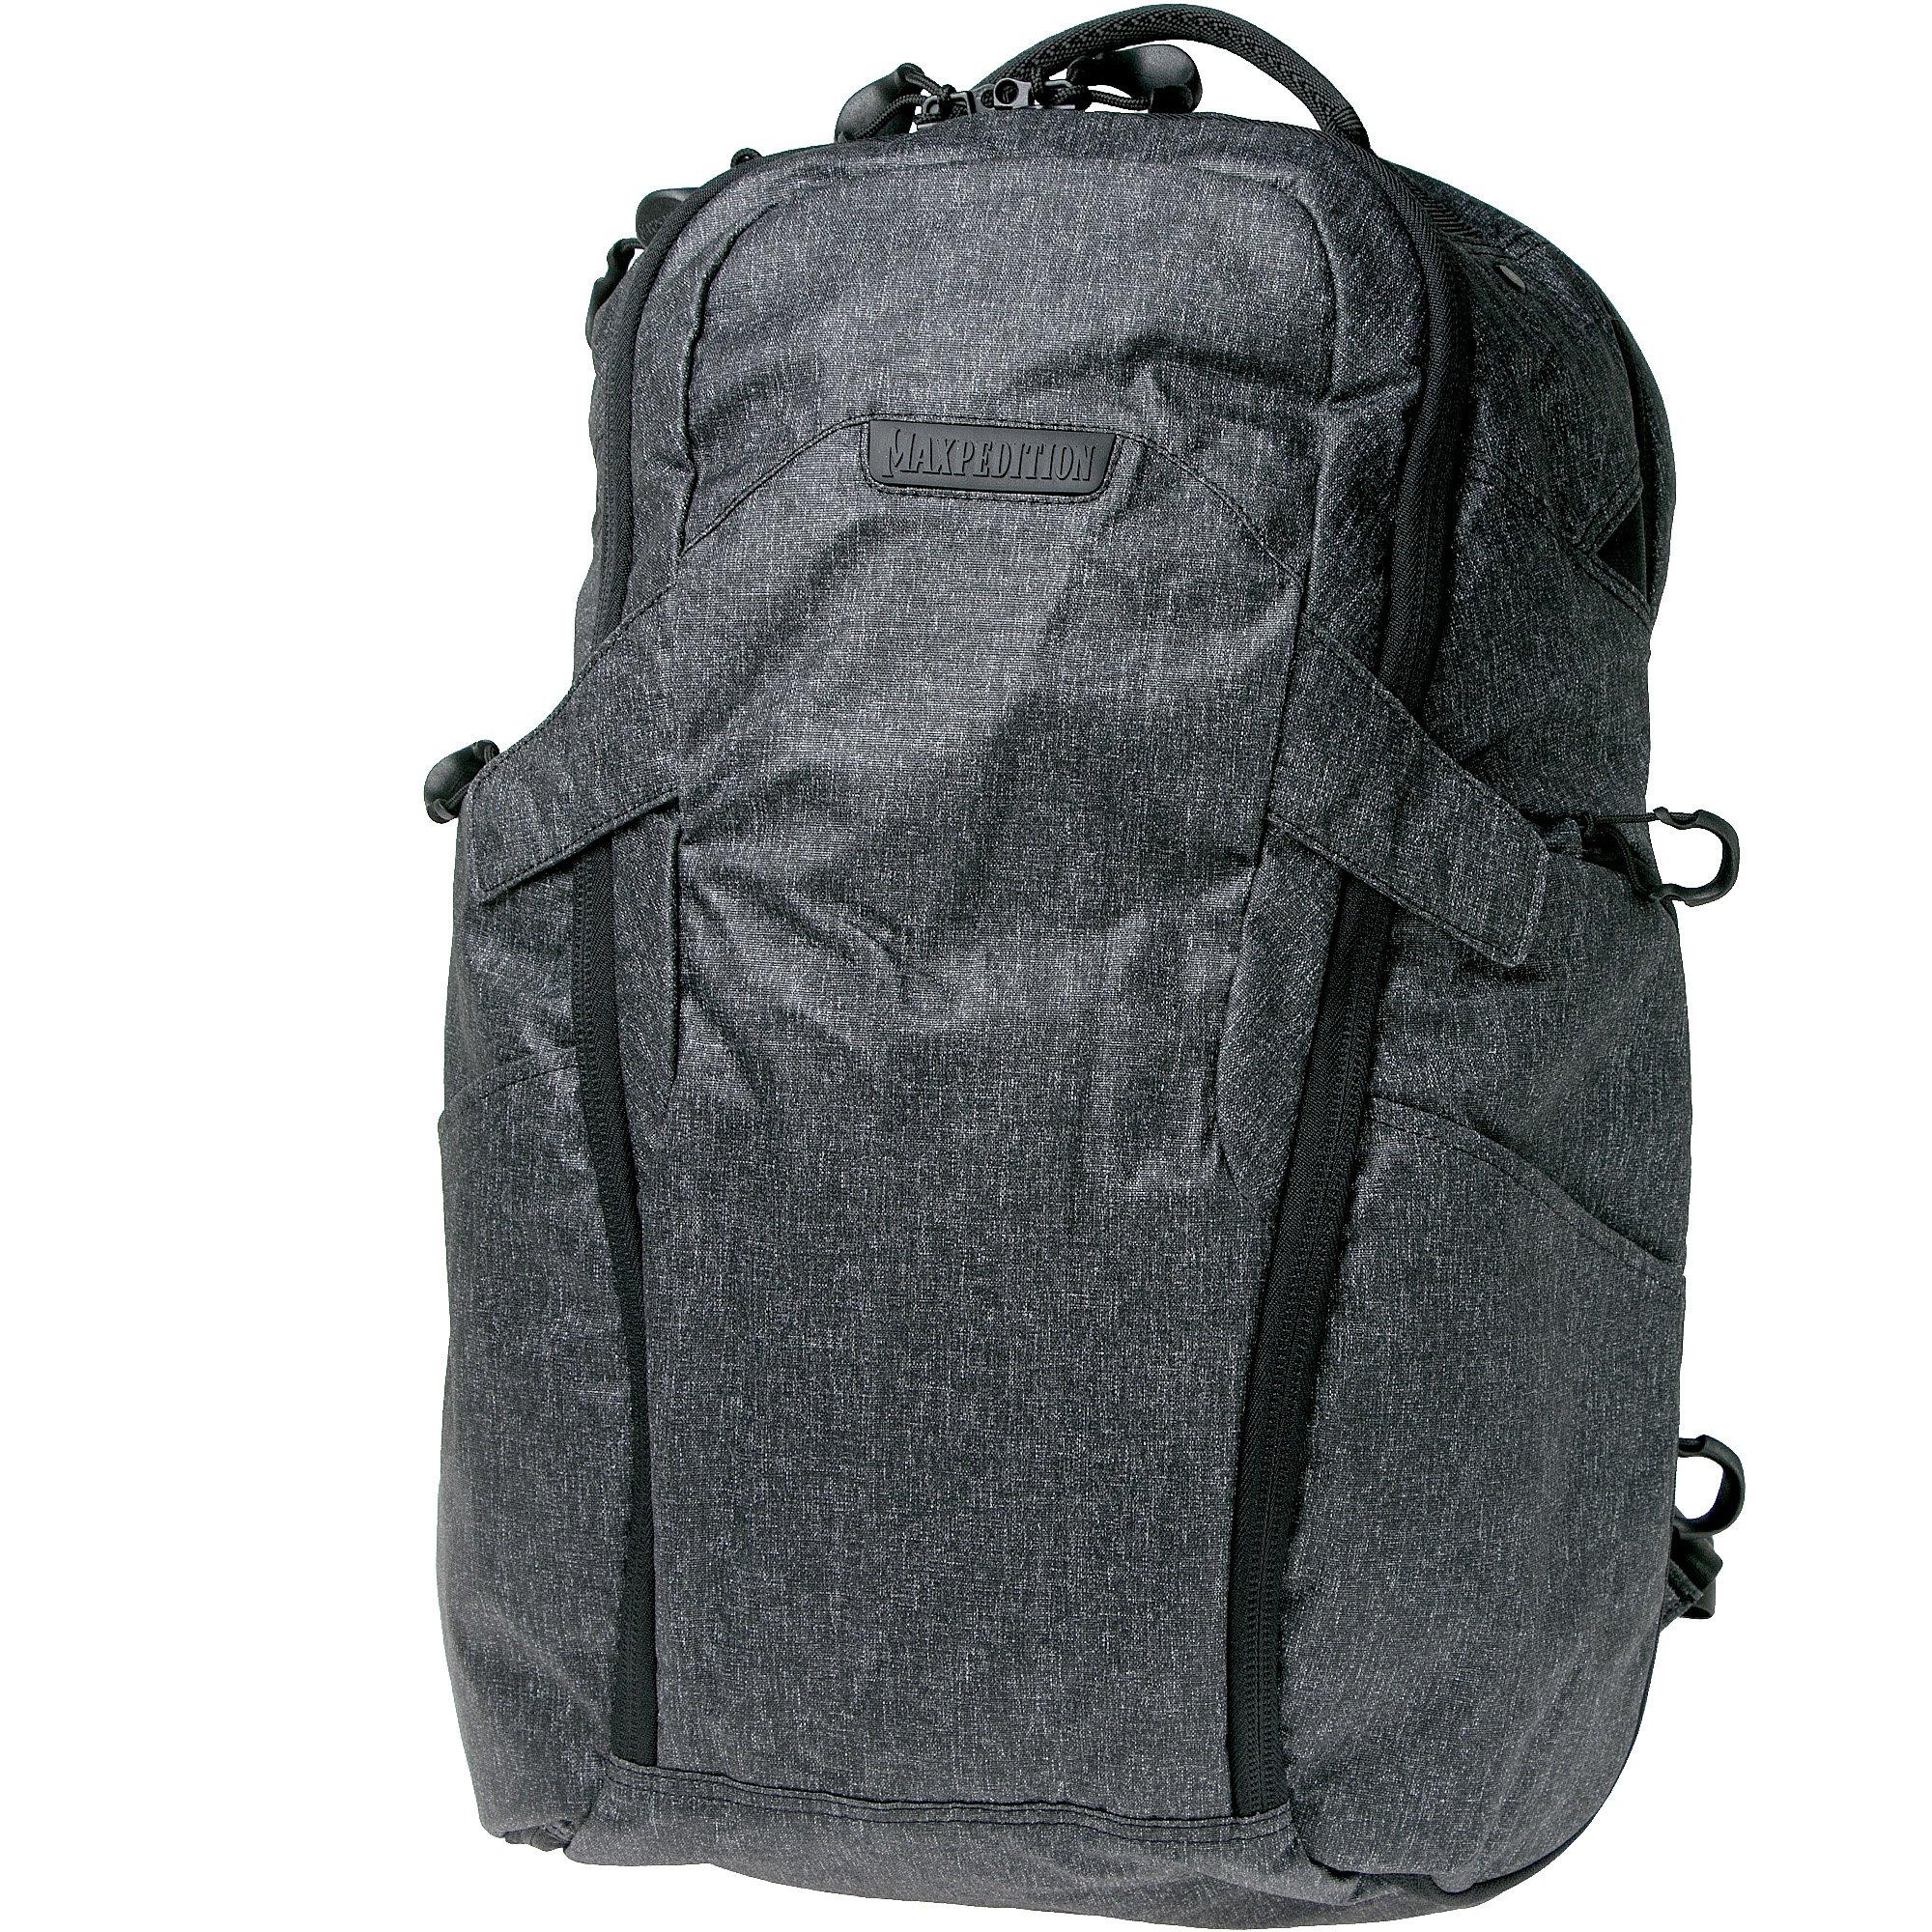 Maxpedition - Falcon-II Backpack (Black)